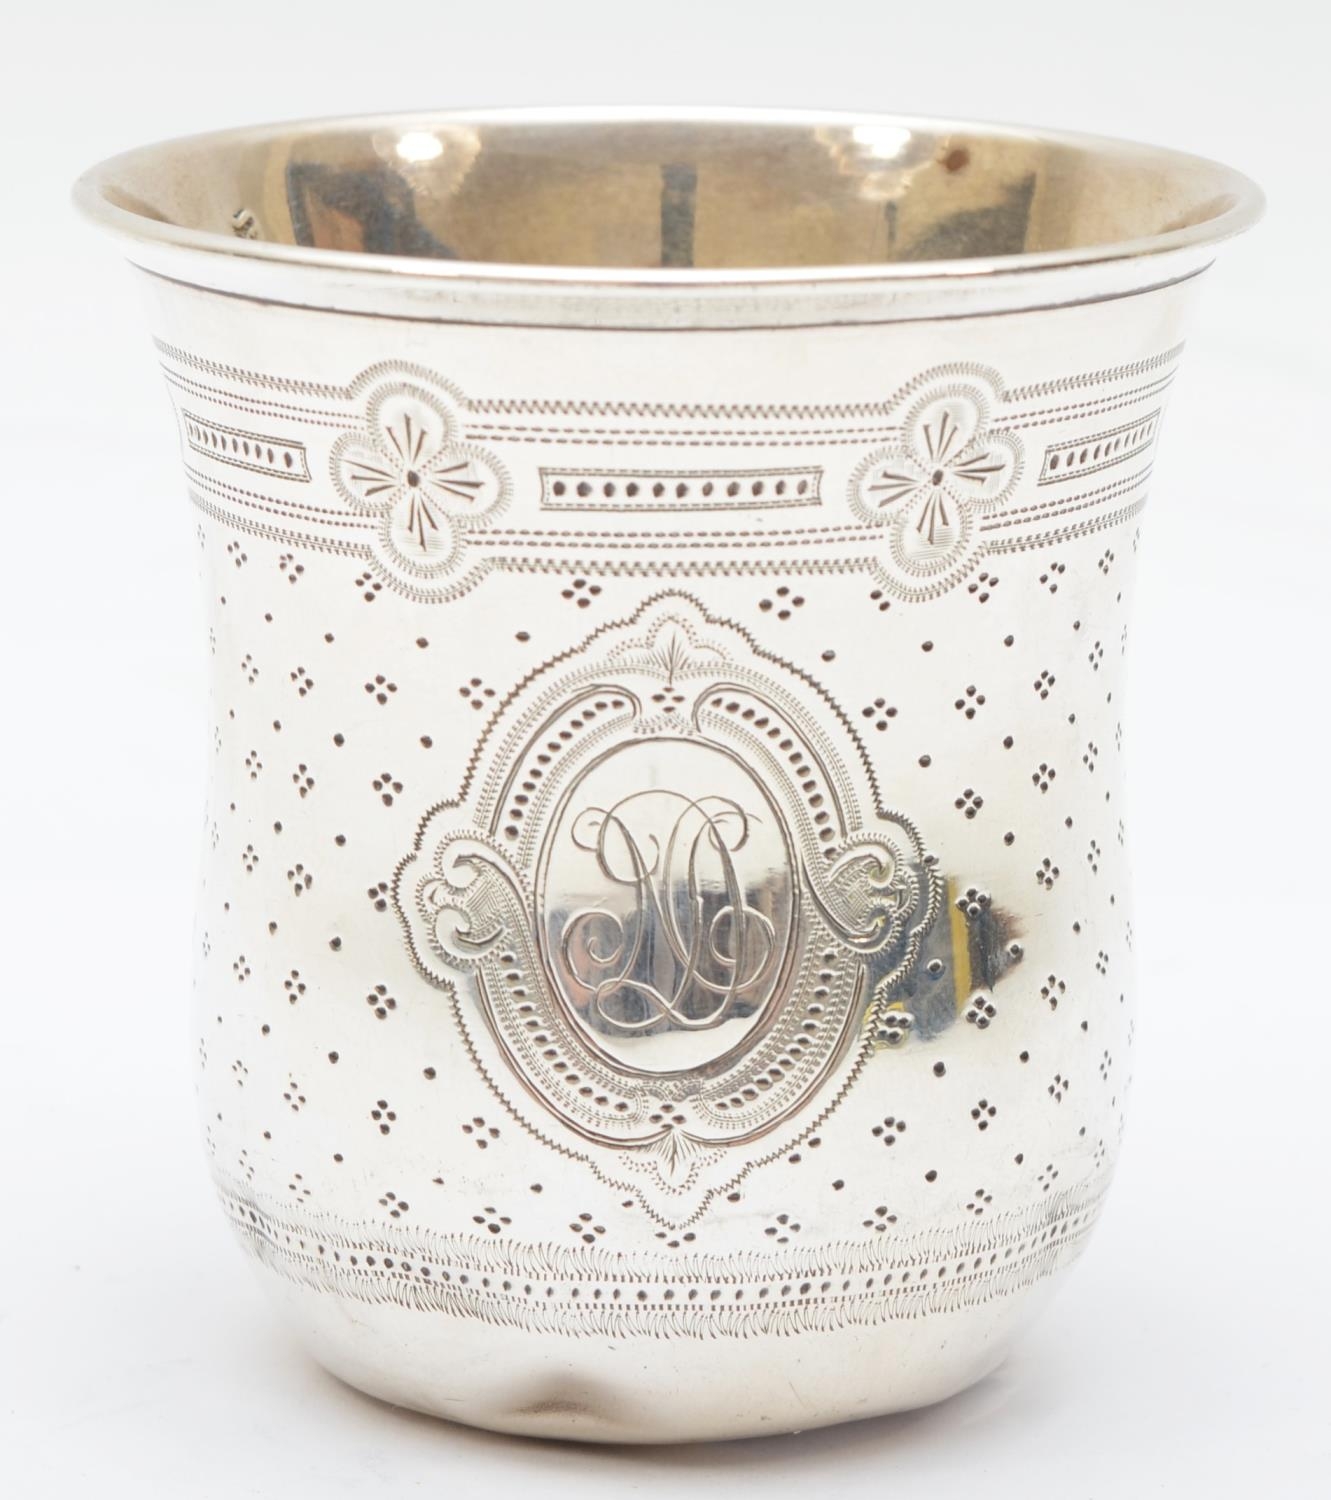 A French silver beaker, by Caesar Tonnelier, Paris, 1845 - 1882, 1st standard Minerva control